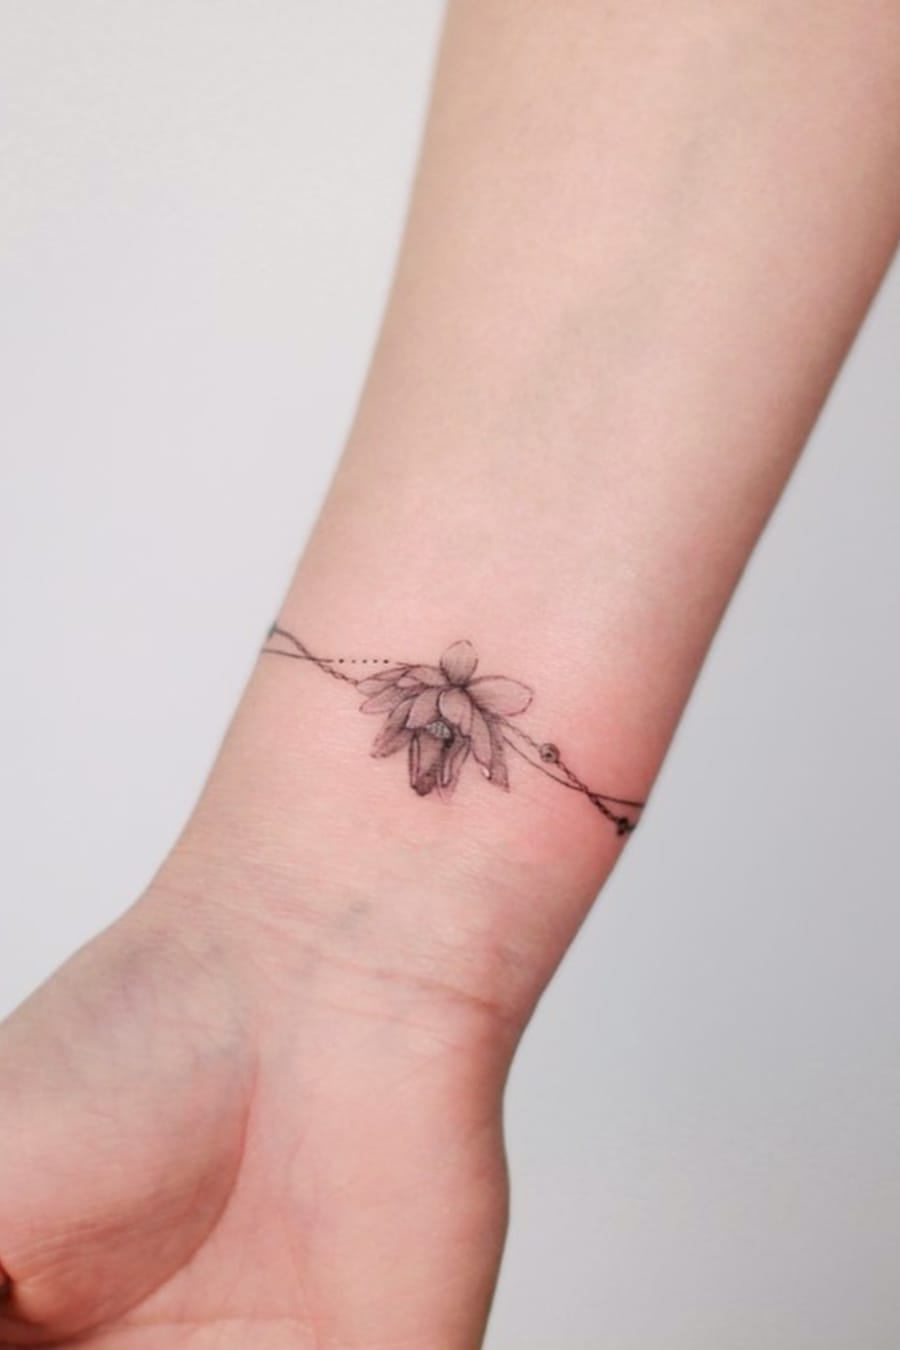 Small Flower Bracelet Tattoo